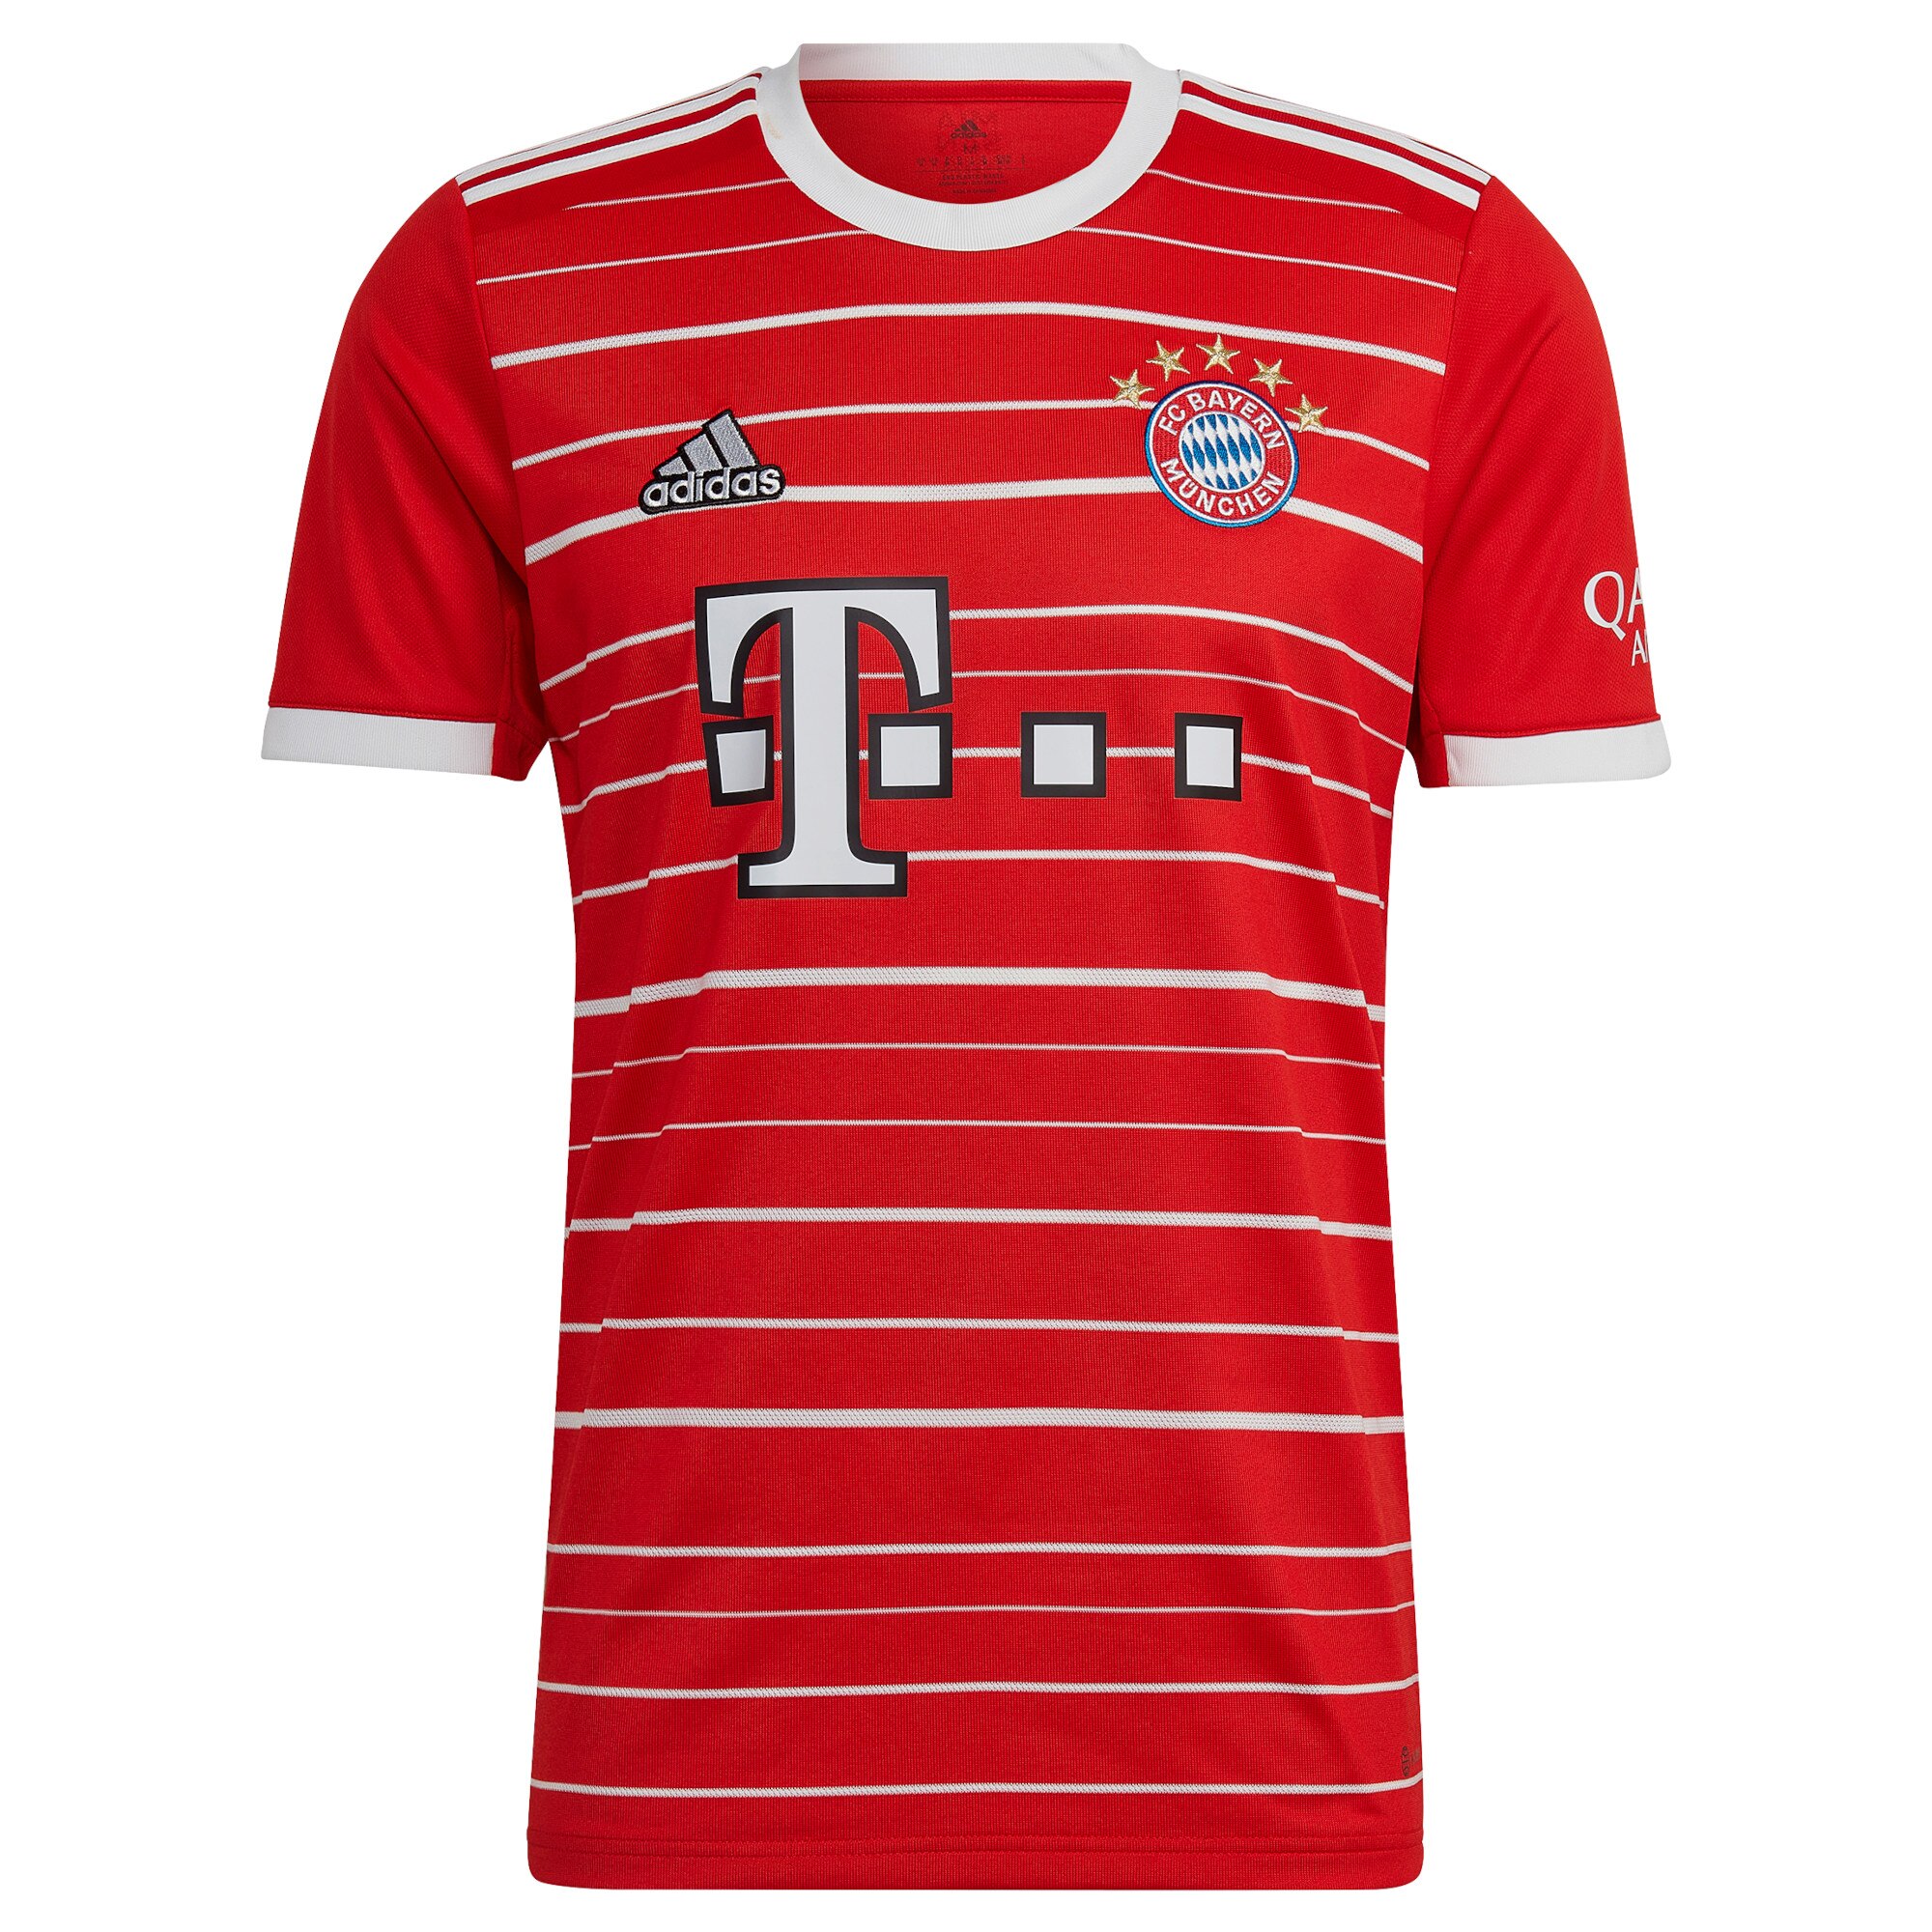 FC Bayern Home Shirt 2022-23 with Sarr 20 printing